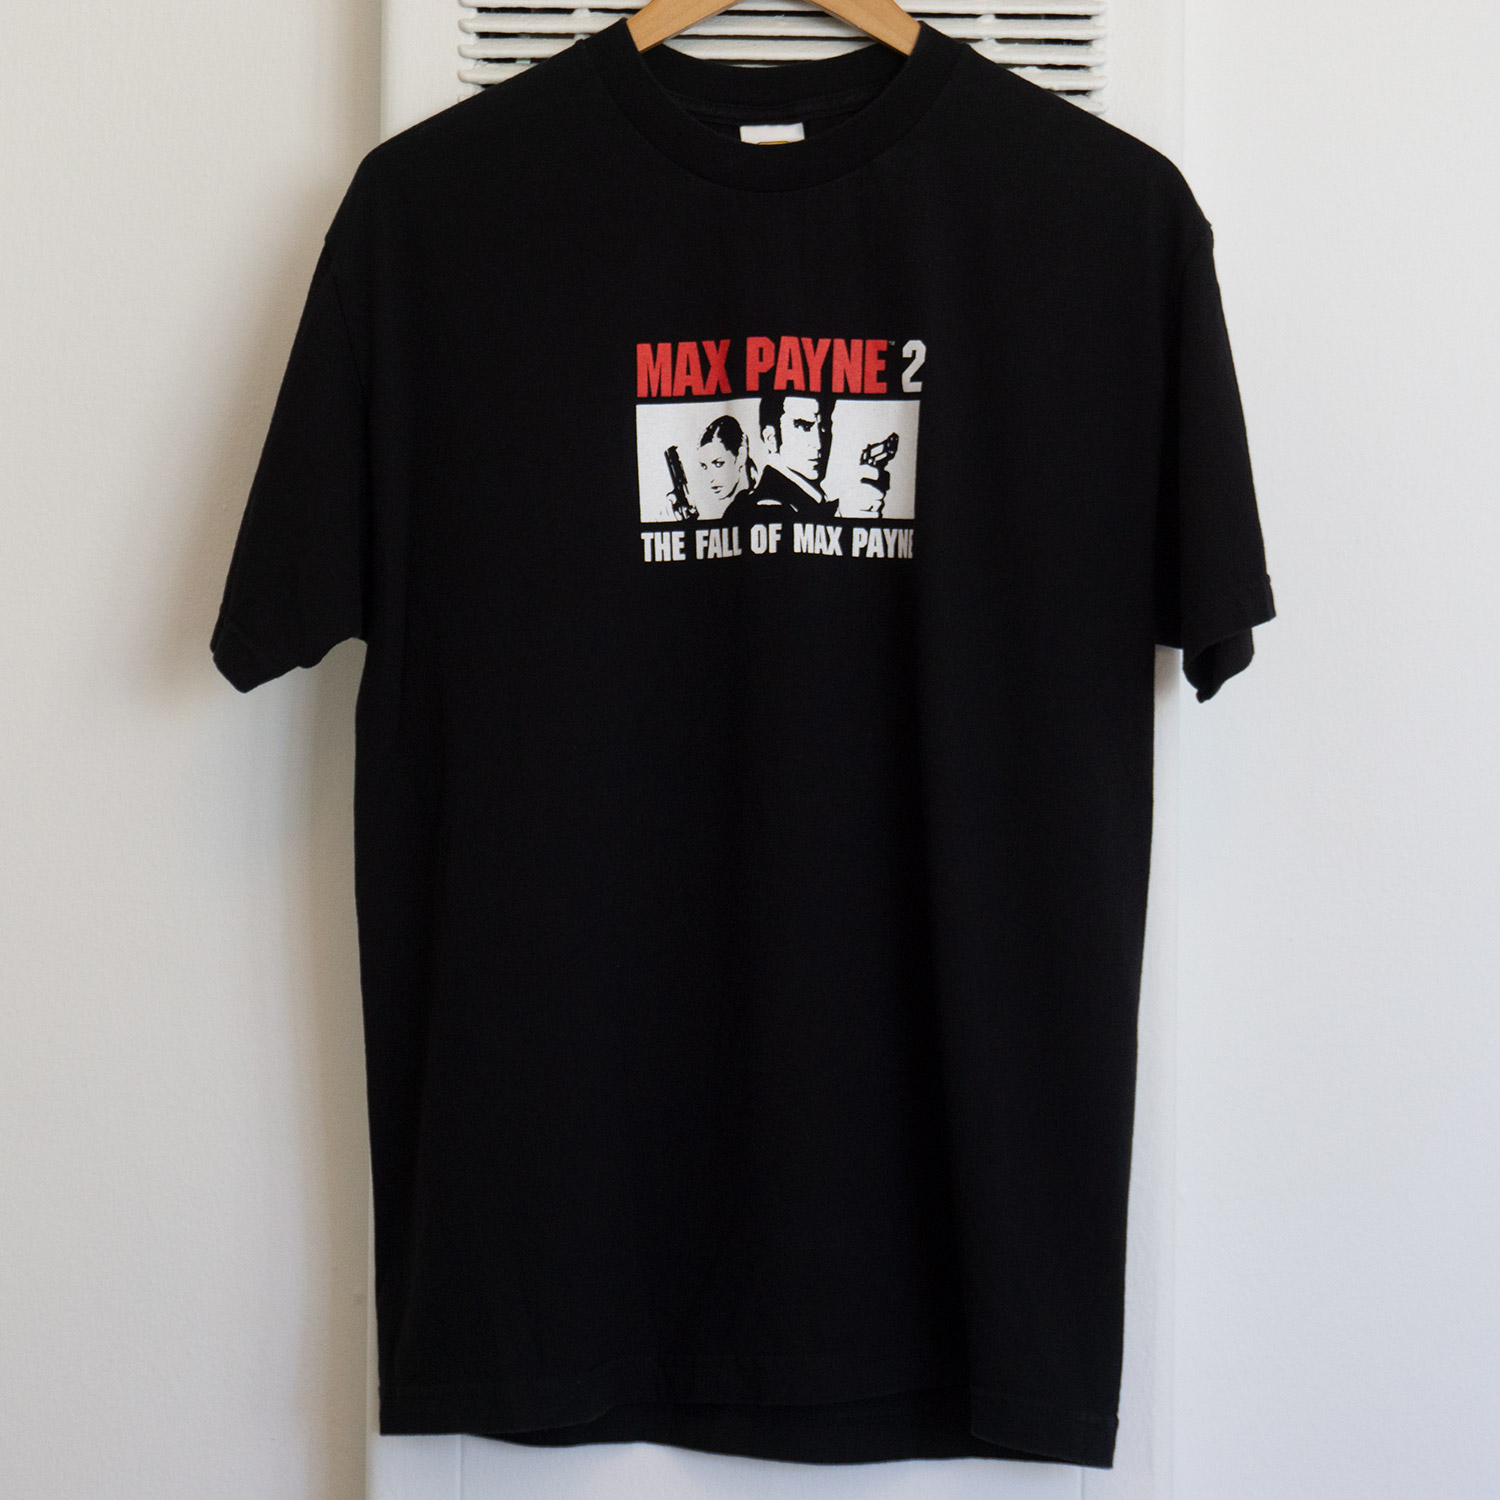 Max Payne 2: The Fall of Max Payne T-shirt